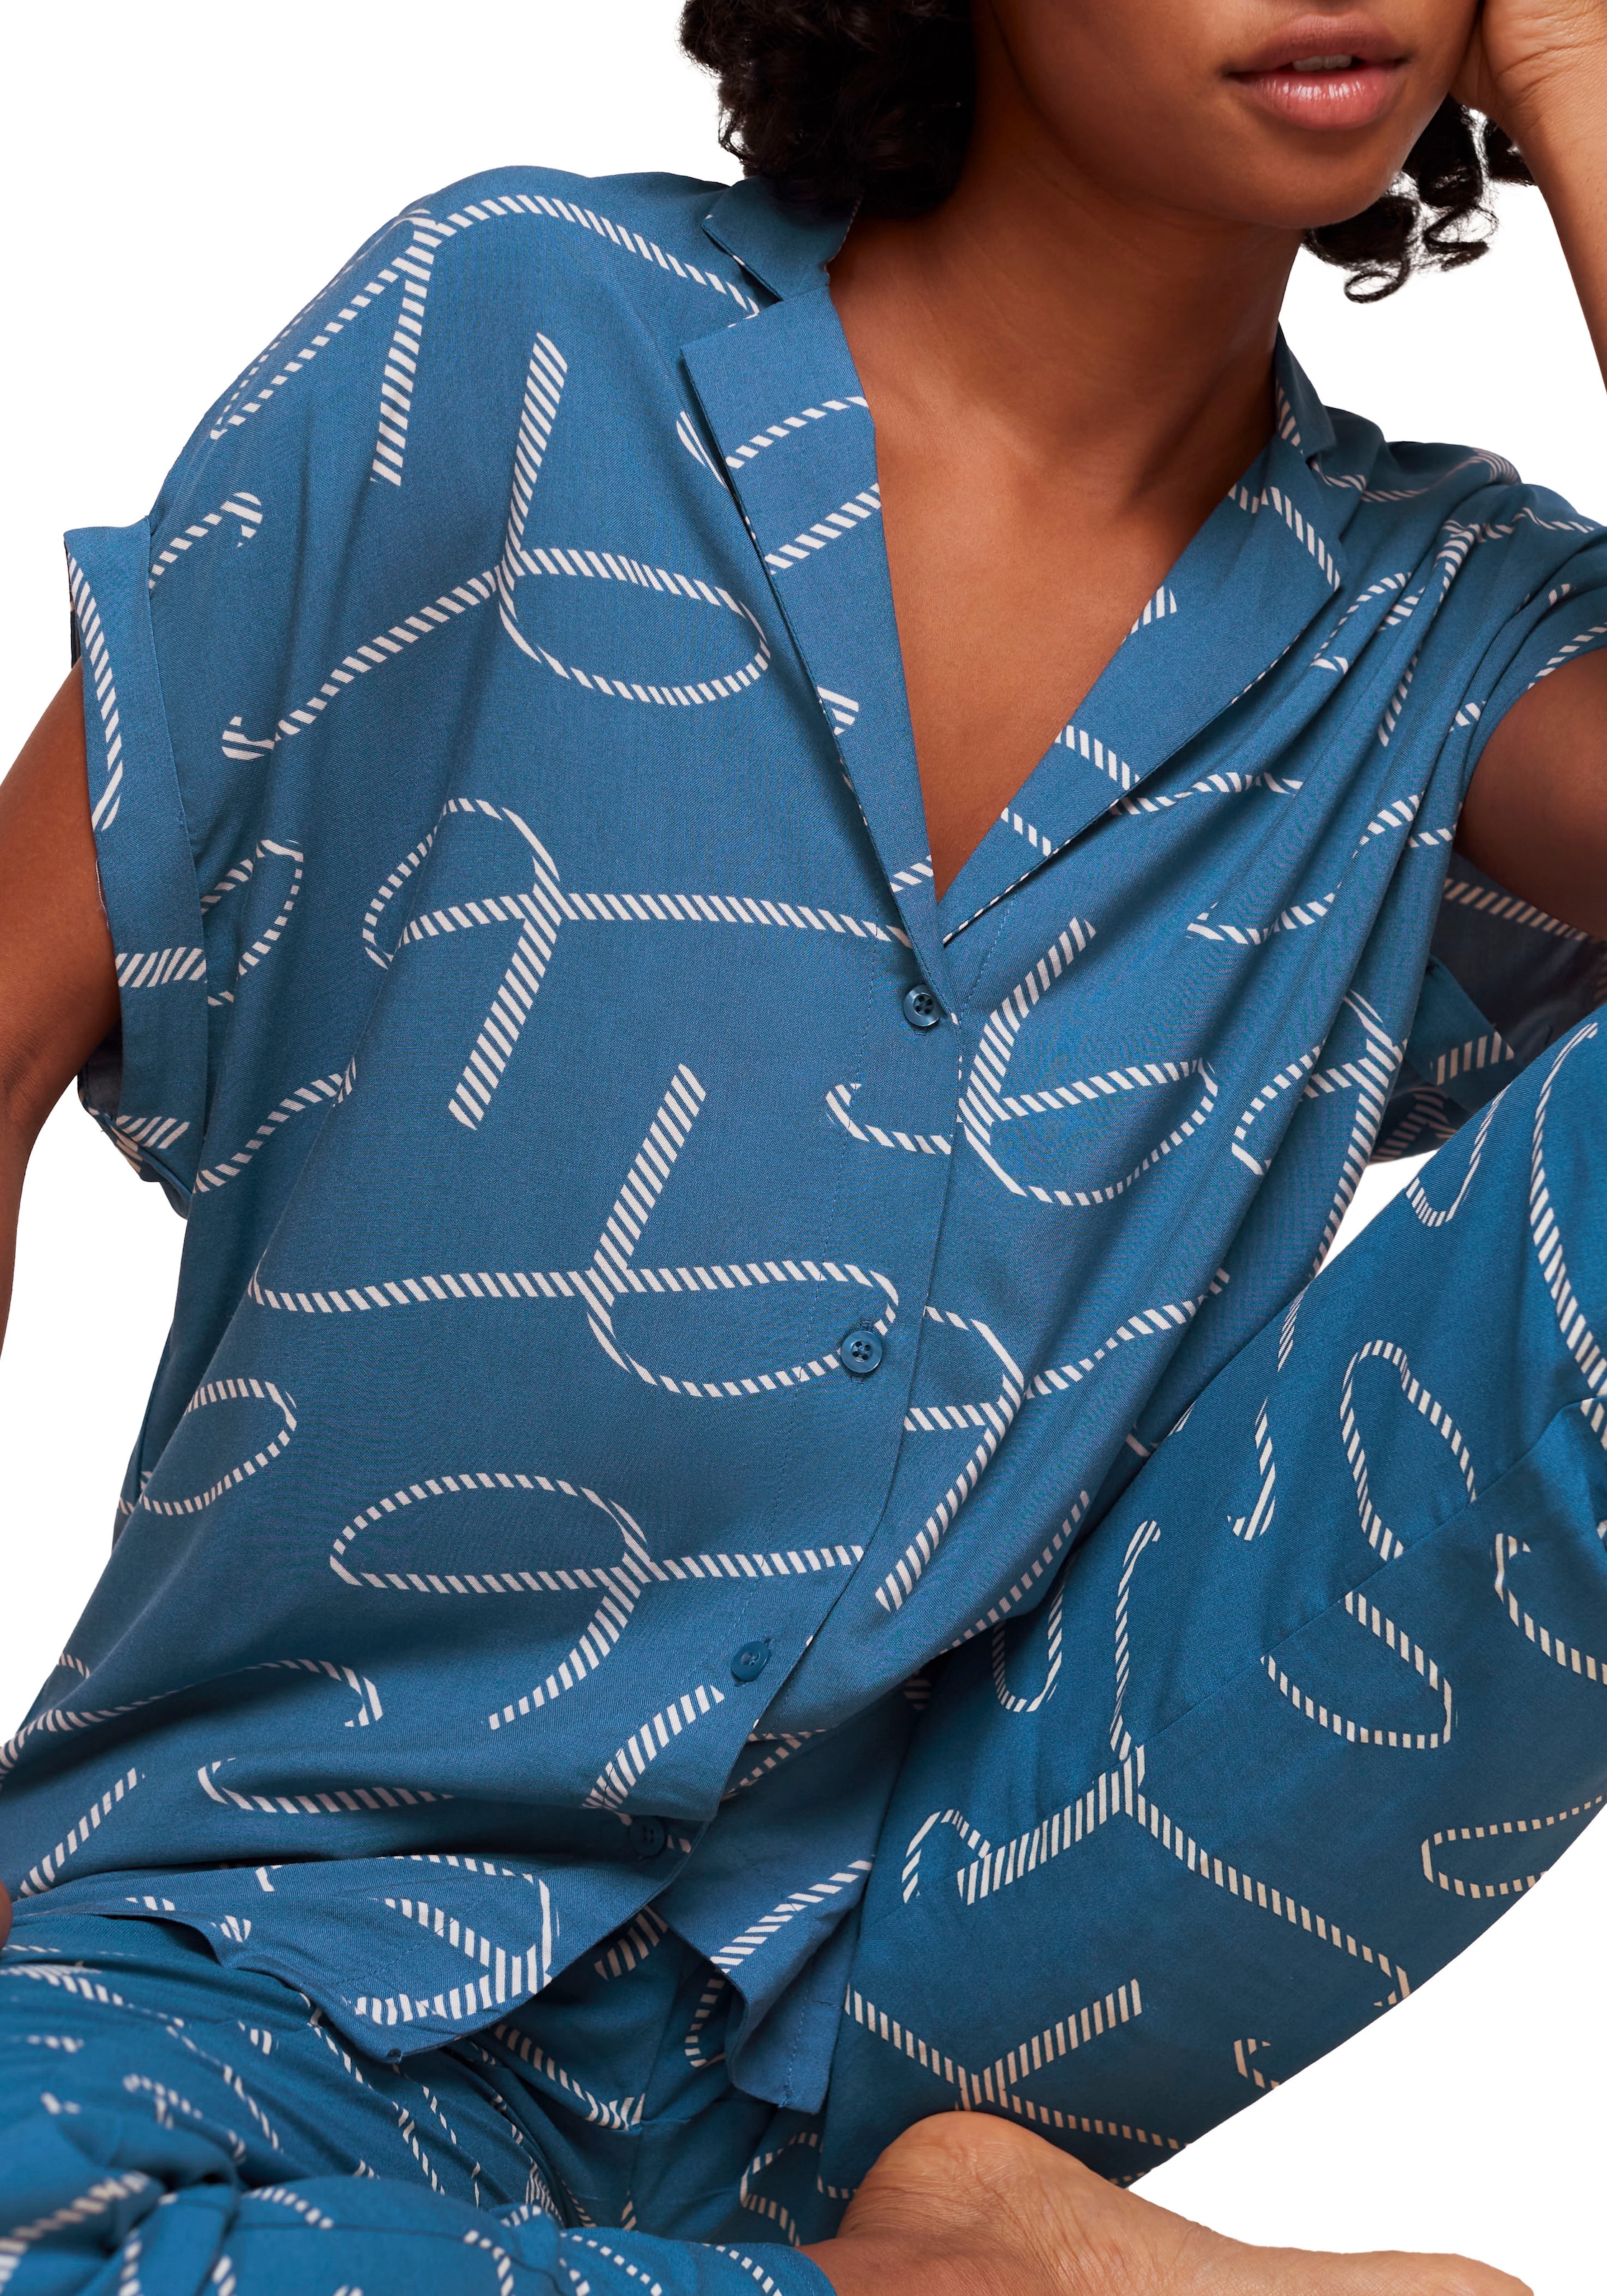 Triumph Pyjama »Boyfriend Fit PW 01«, (Set, 2 tlg.), Triumph-Logodruck